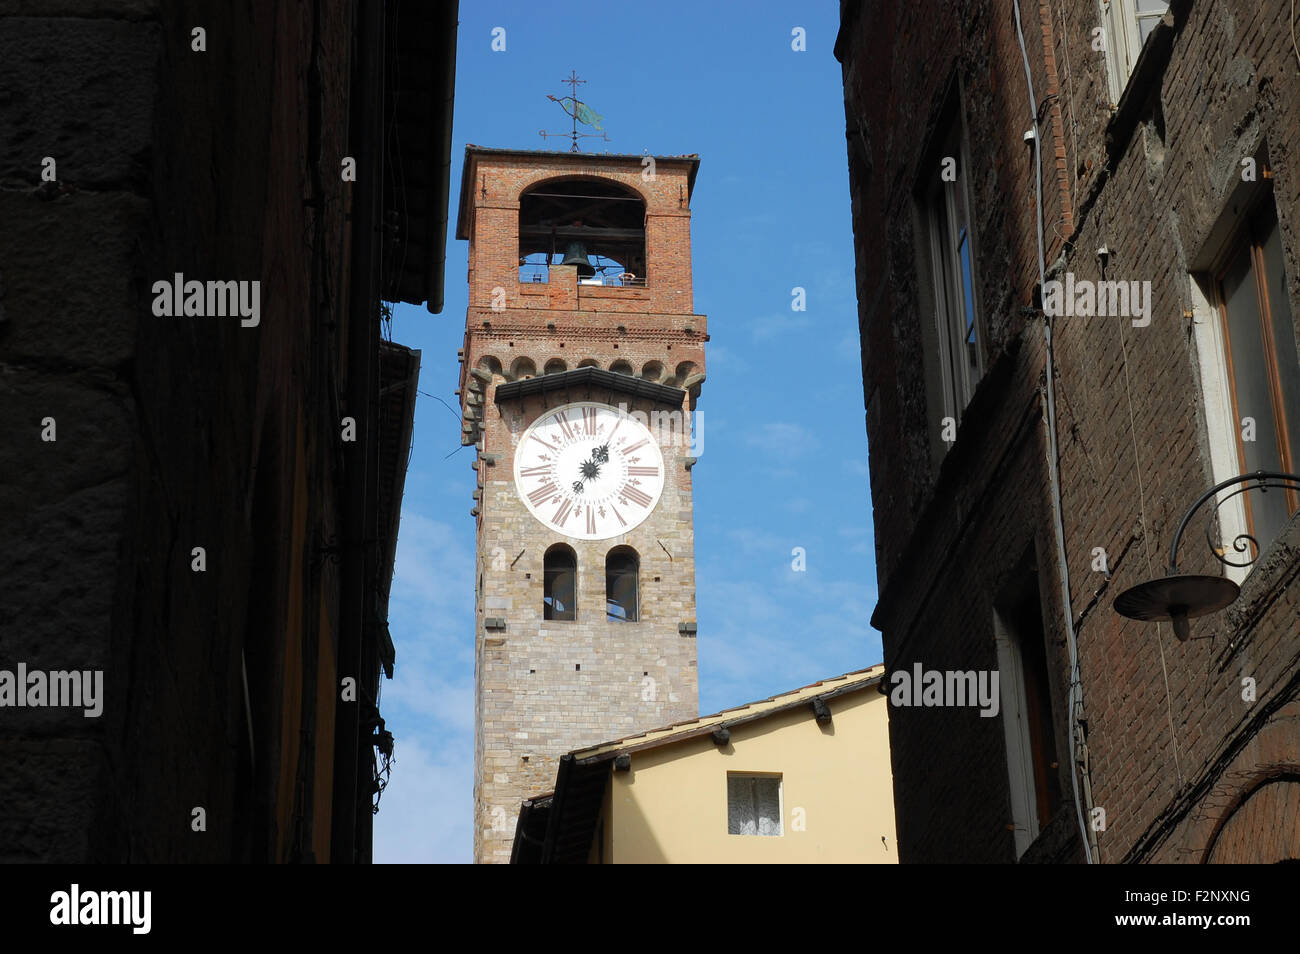 La tour de l'horloge Torre Civica della Ore à Lucca, Italie. Banque D'Images